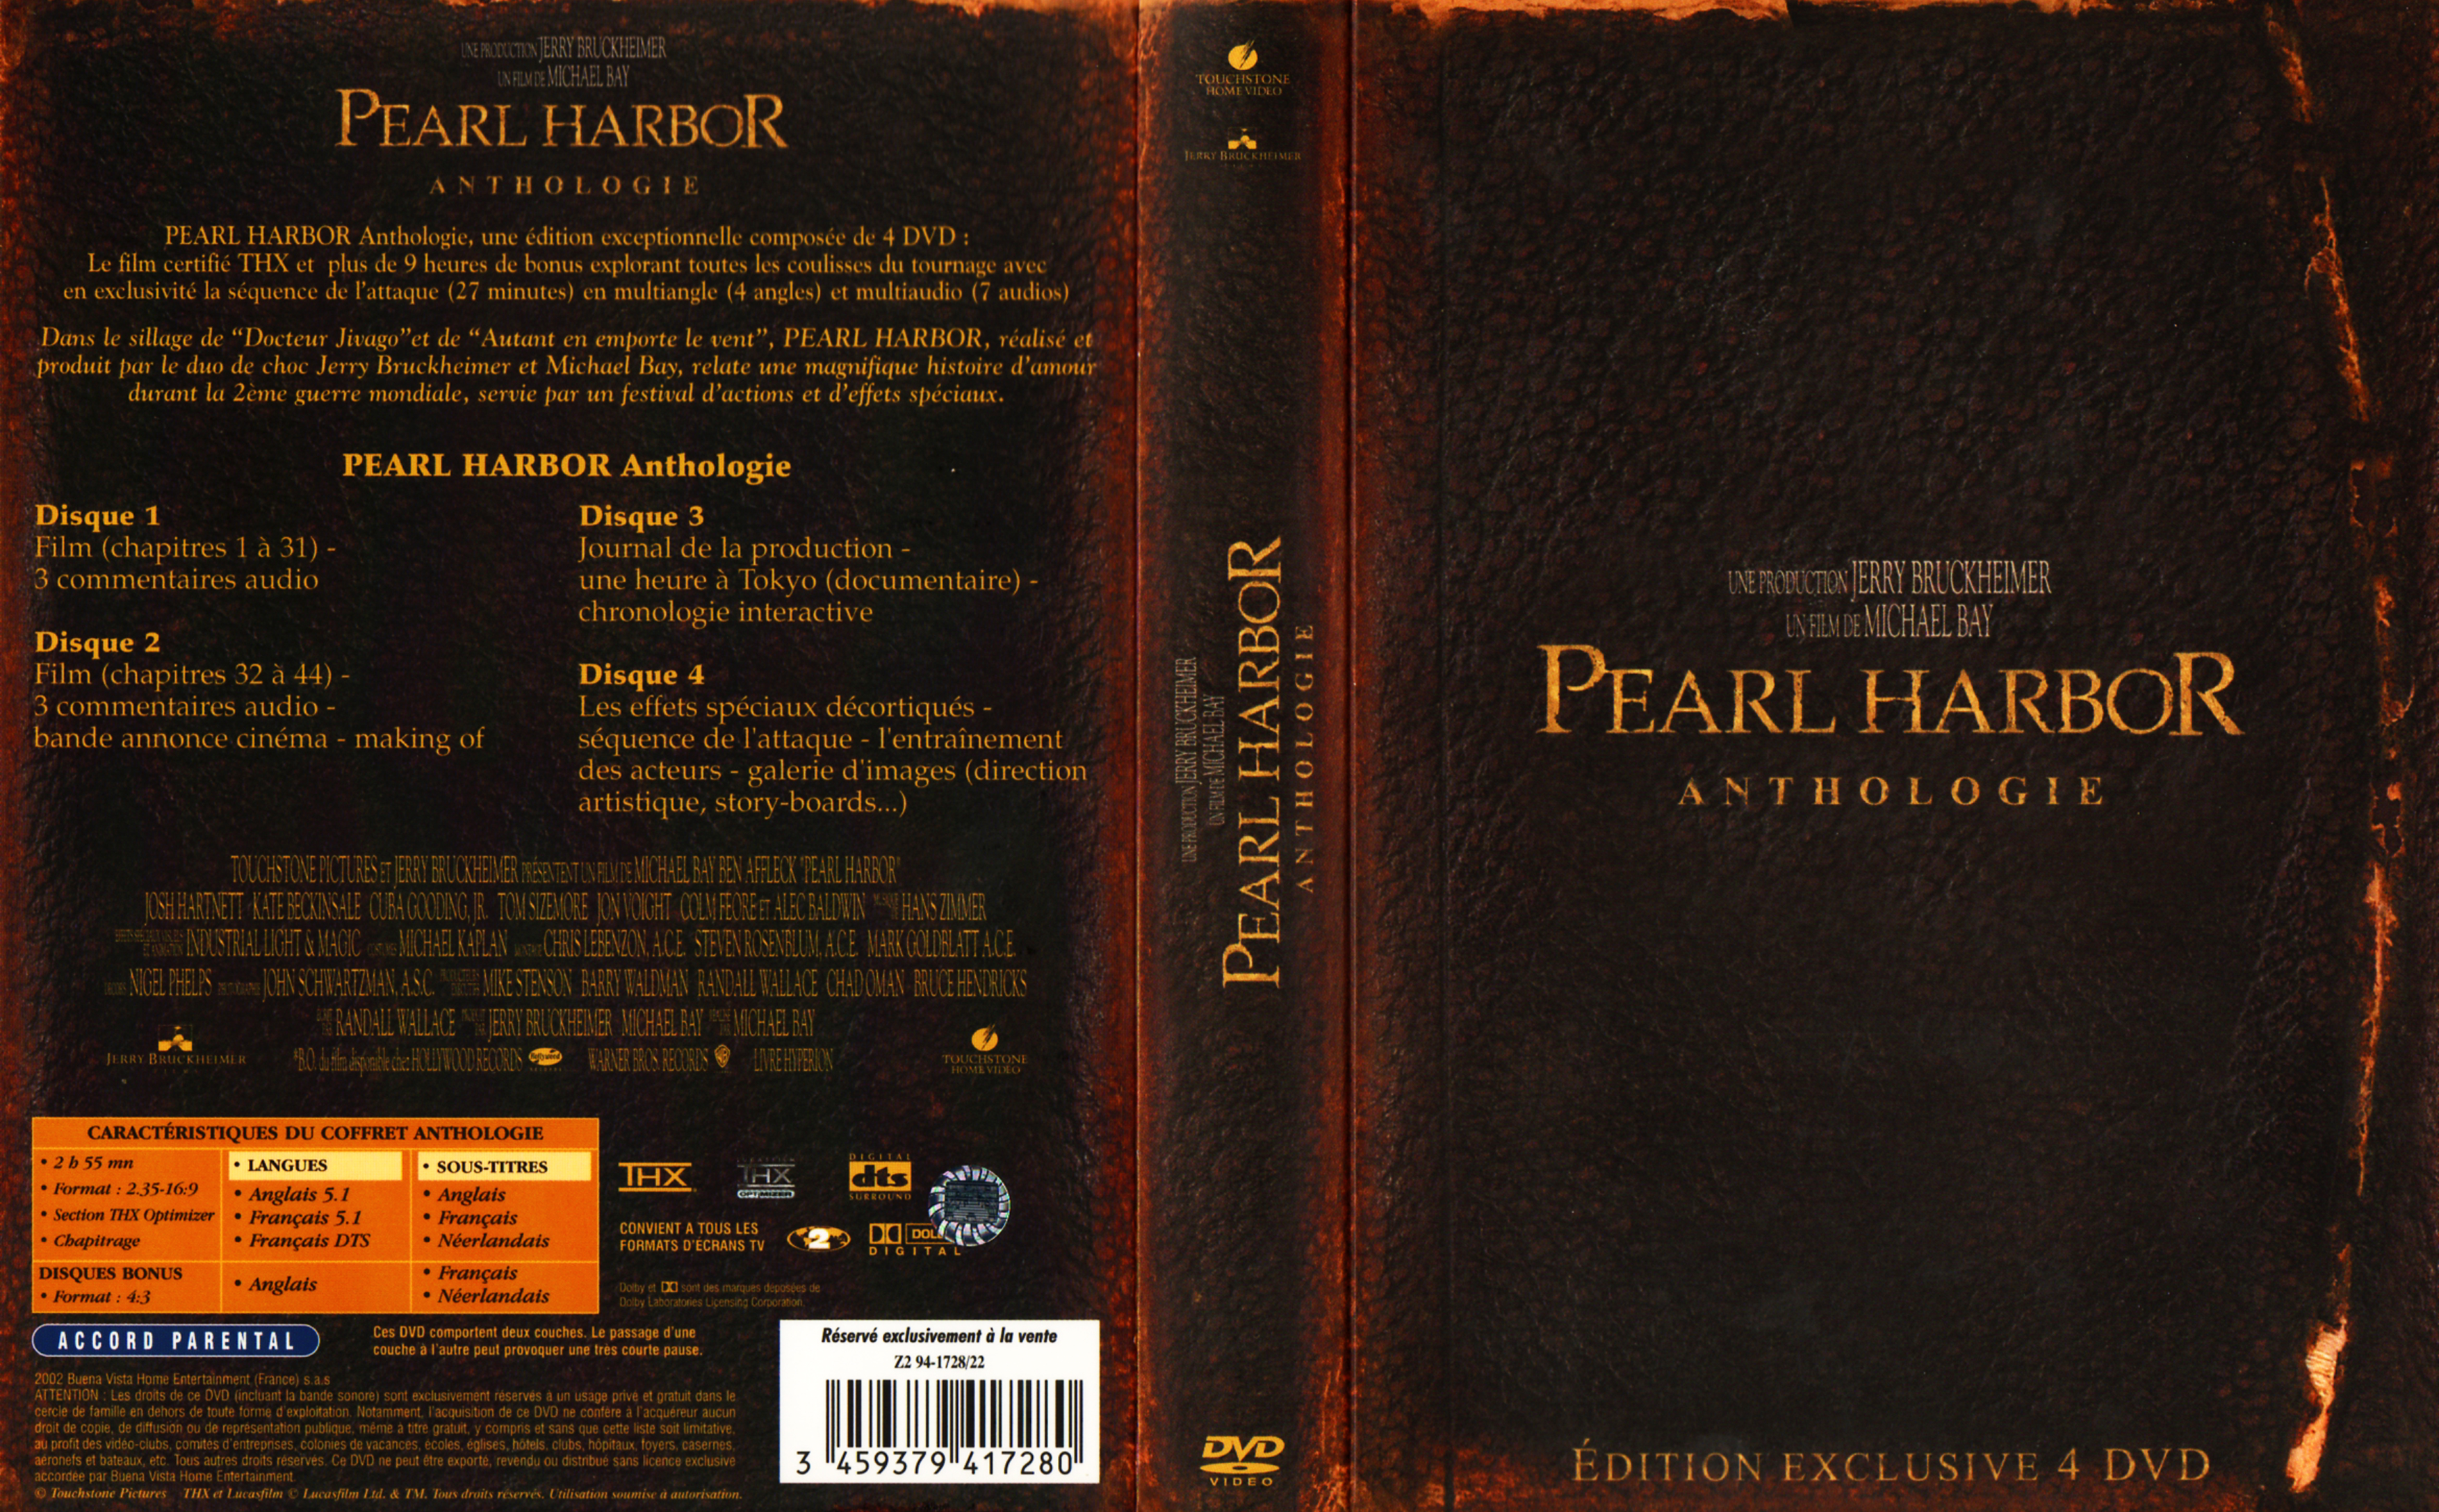 Jaquette DVD Pearl Harbor v3